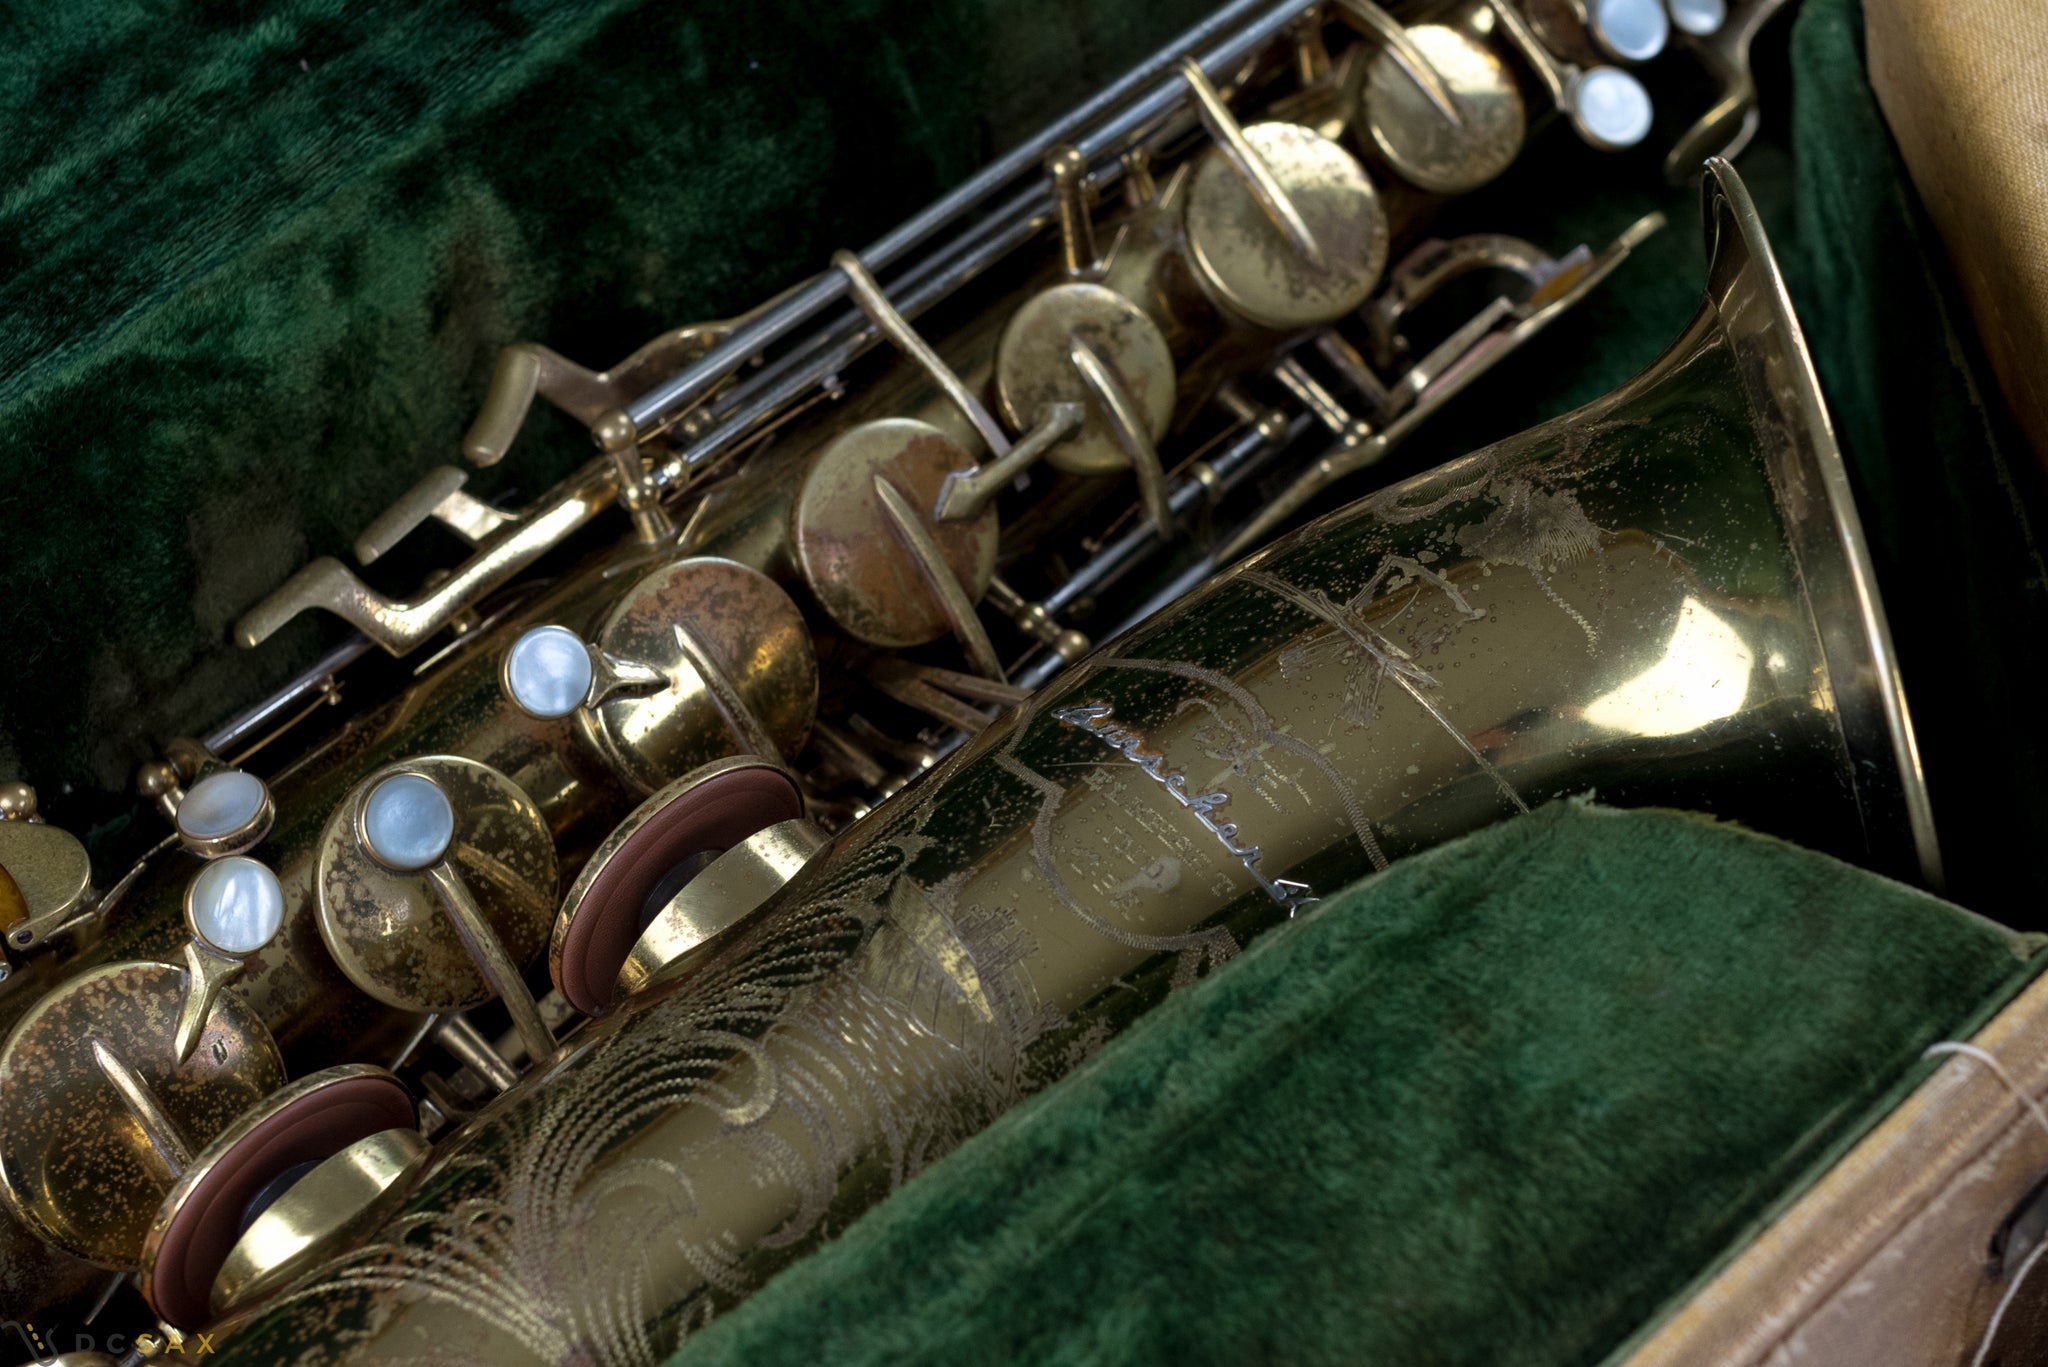 1949 Buescher 400 Top Hat and Cane Tenor Saxophone, Fresh Overhaul, Original Lacquer, Video